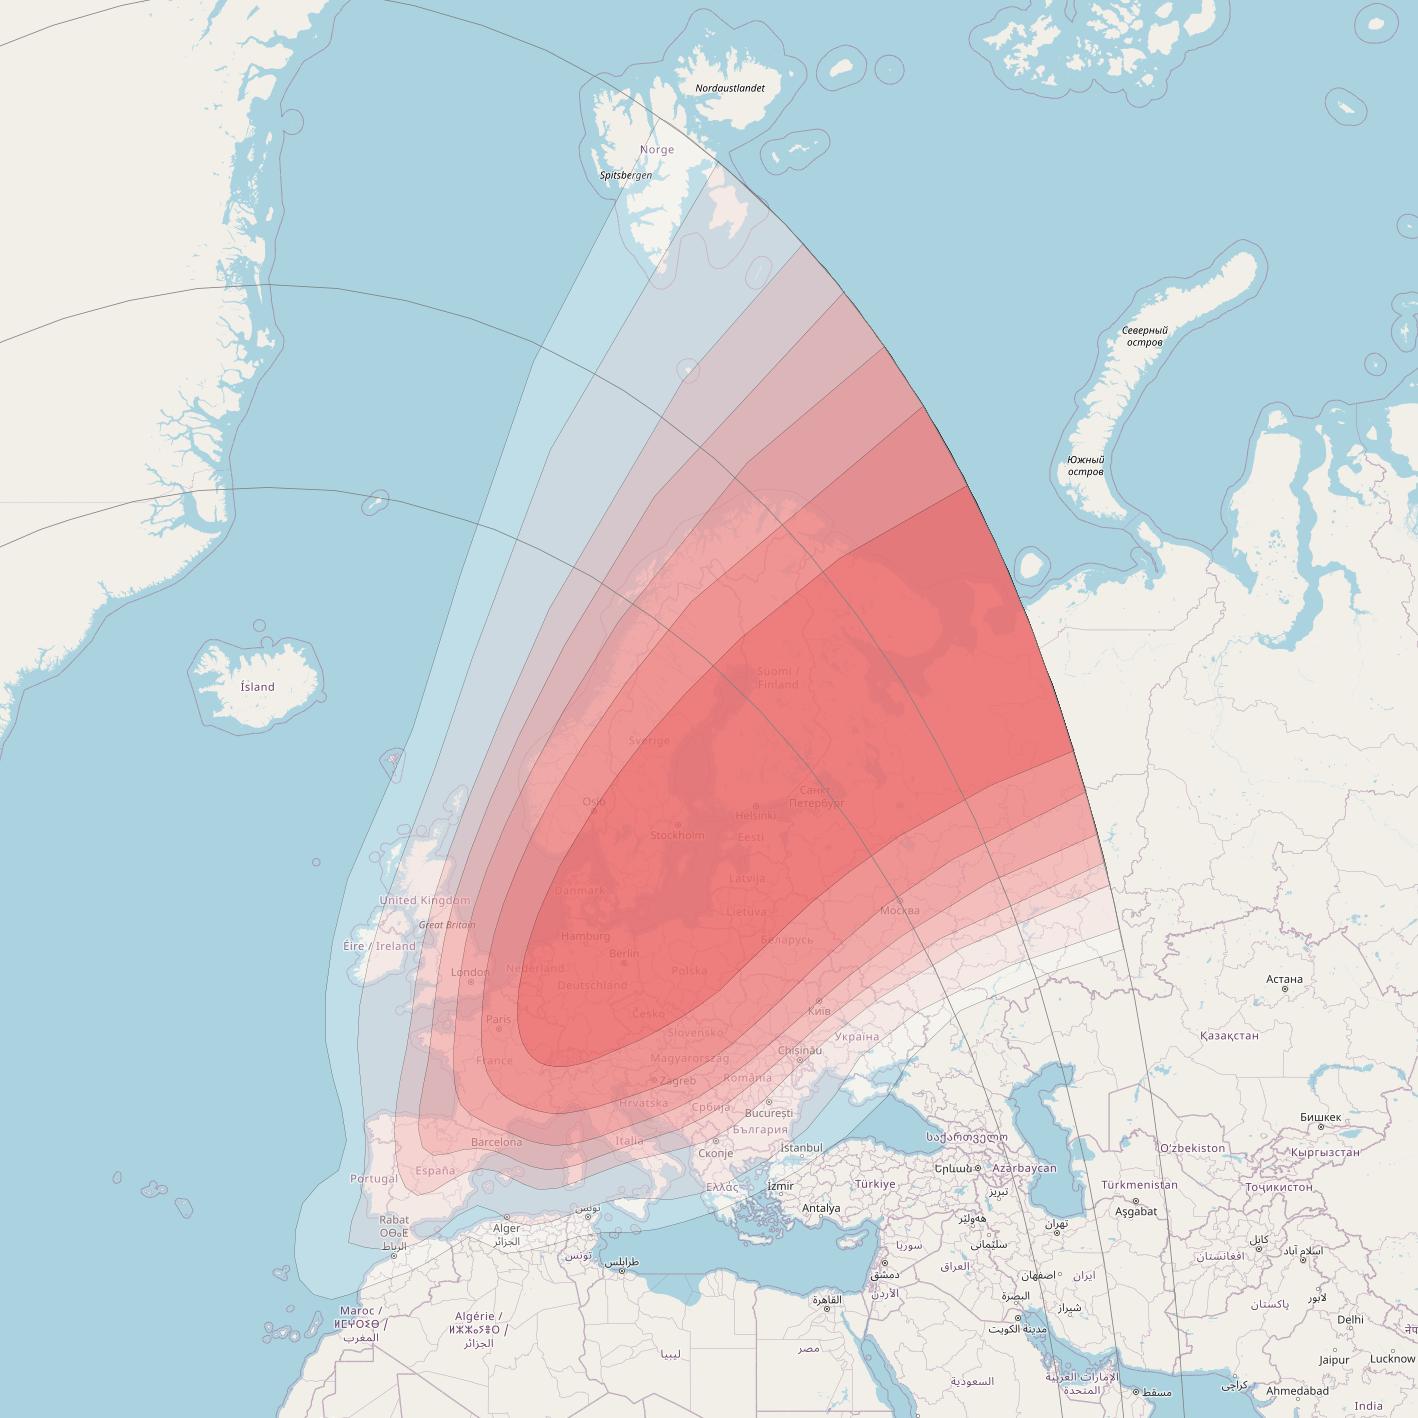 Intelsat 37e at 18° W downlink Ku-band Spot02 User beam coverage map